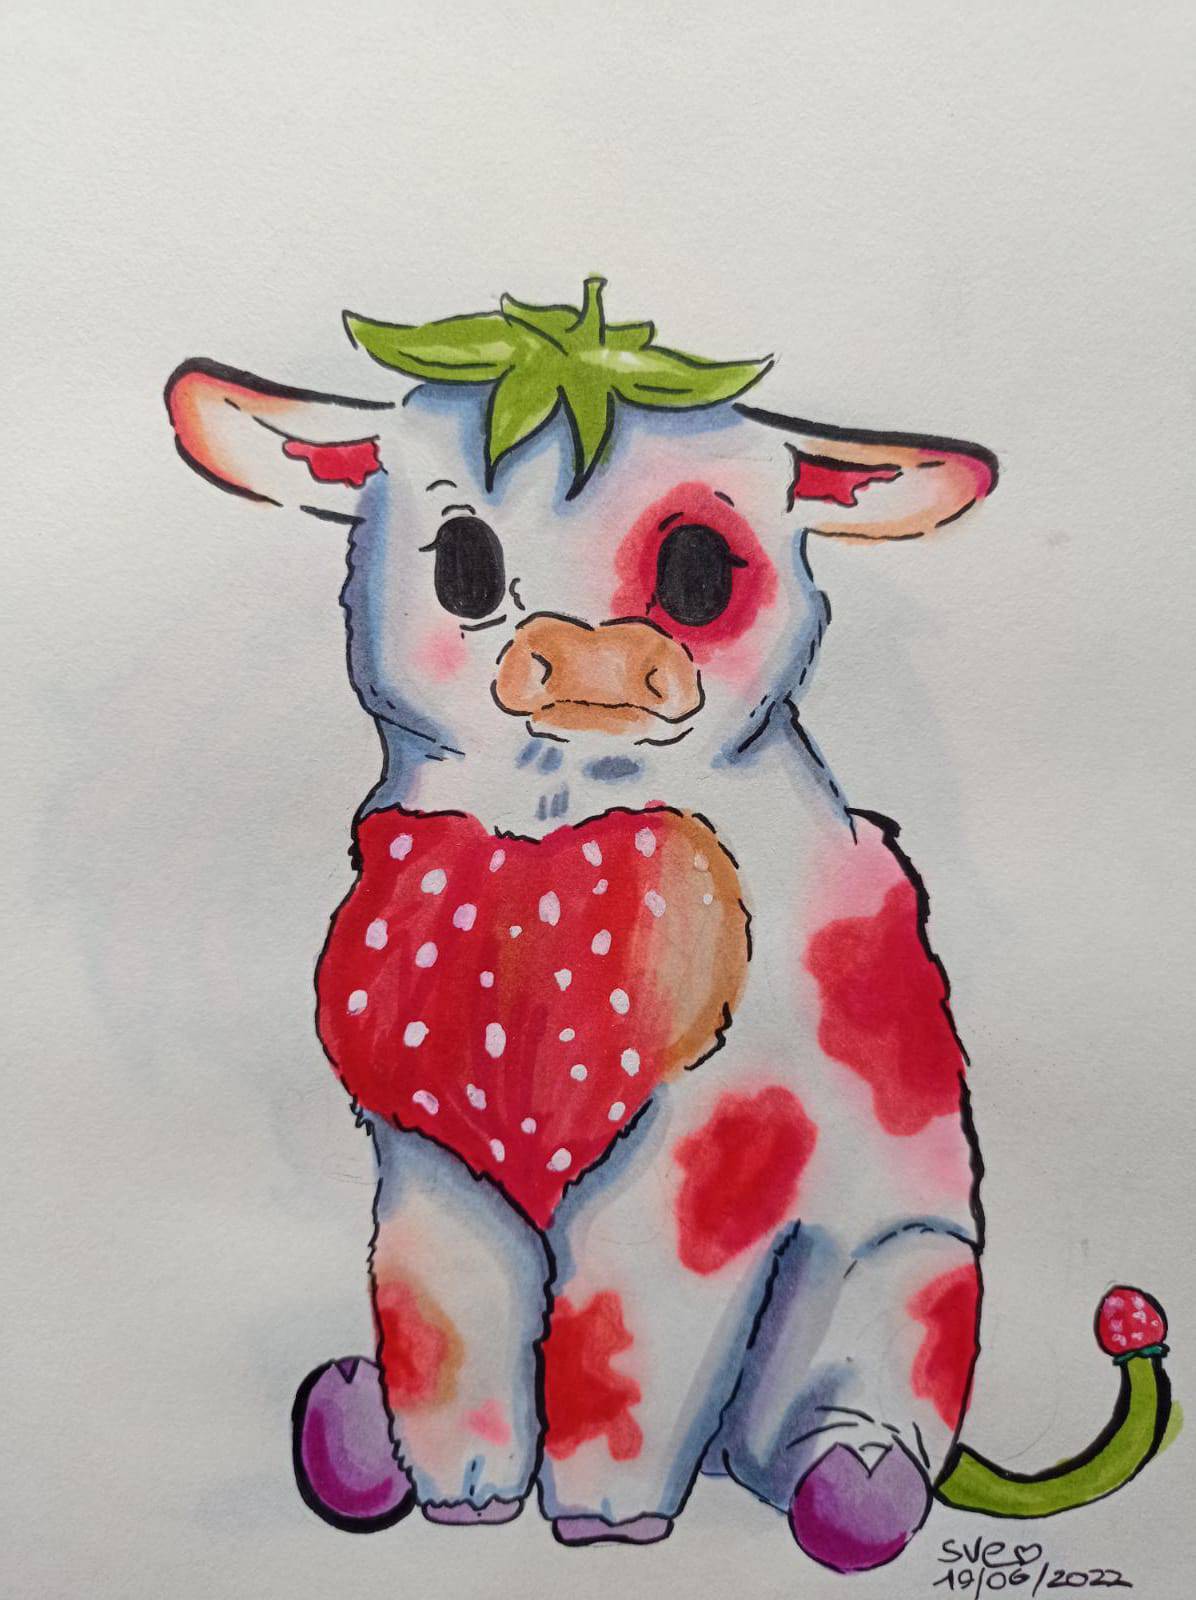 Strawberry Cow by Alexbrushesart on DeviantArt